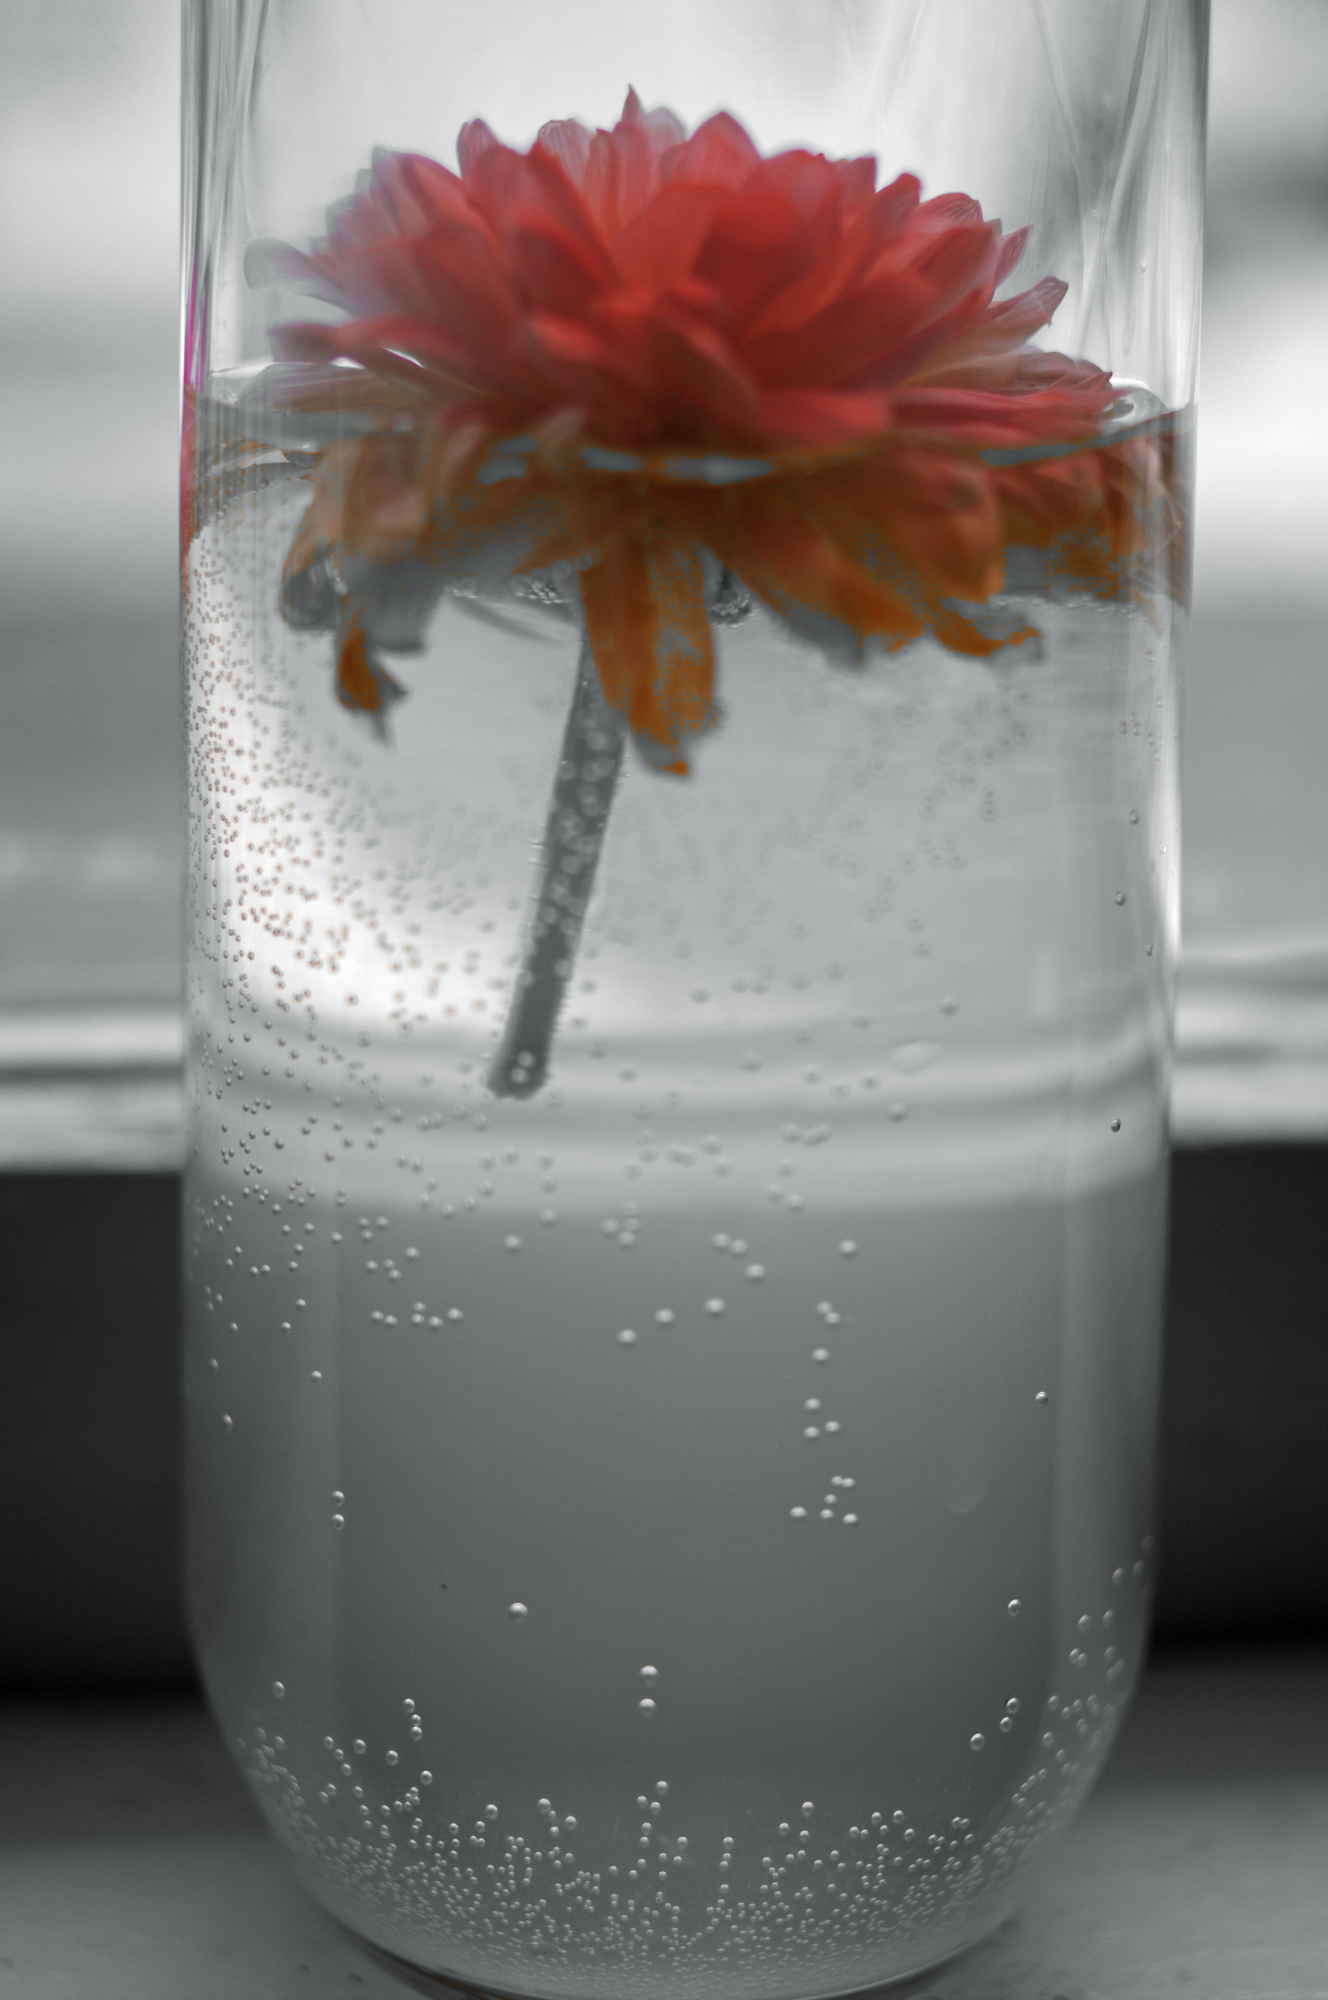 Flower Floating in Glass